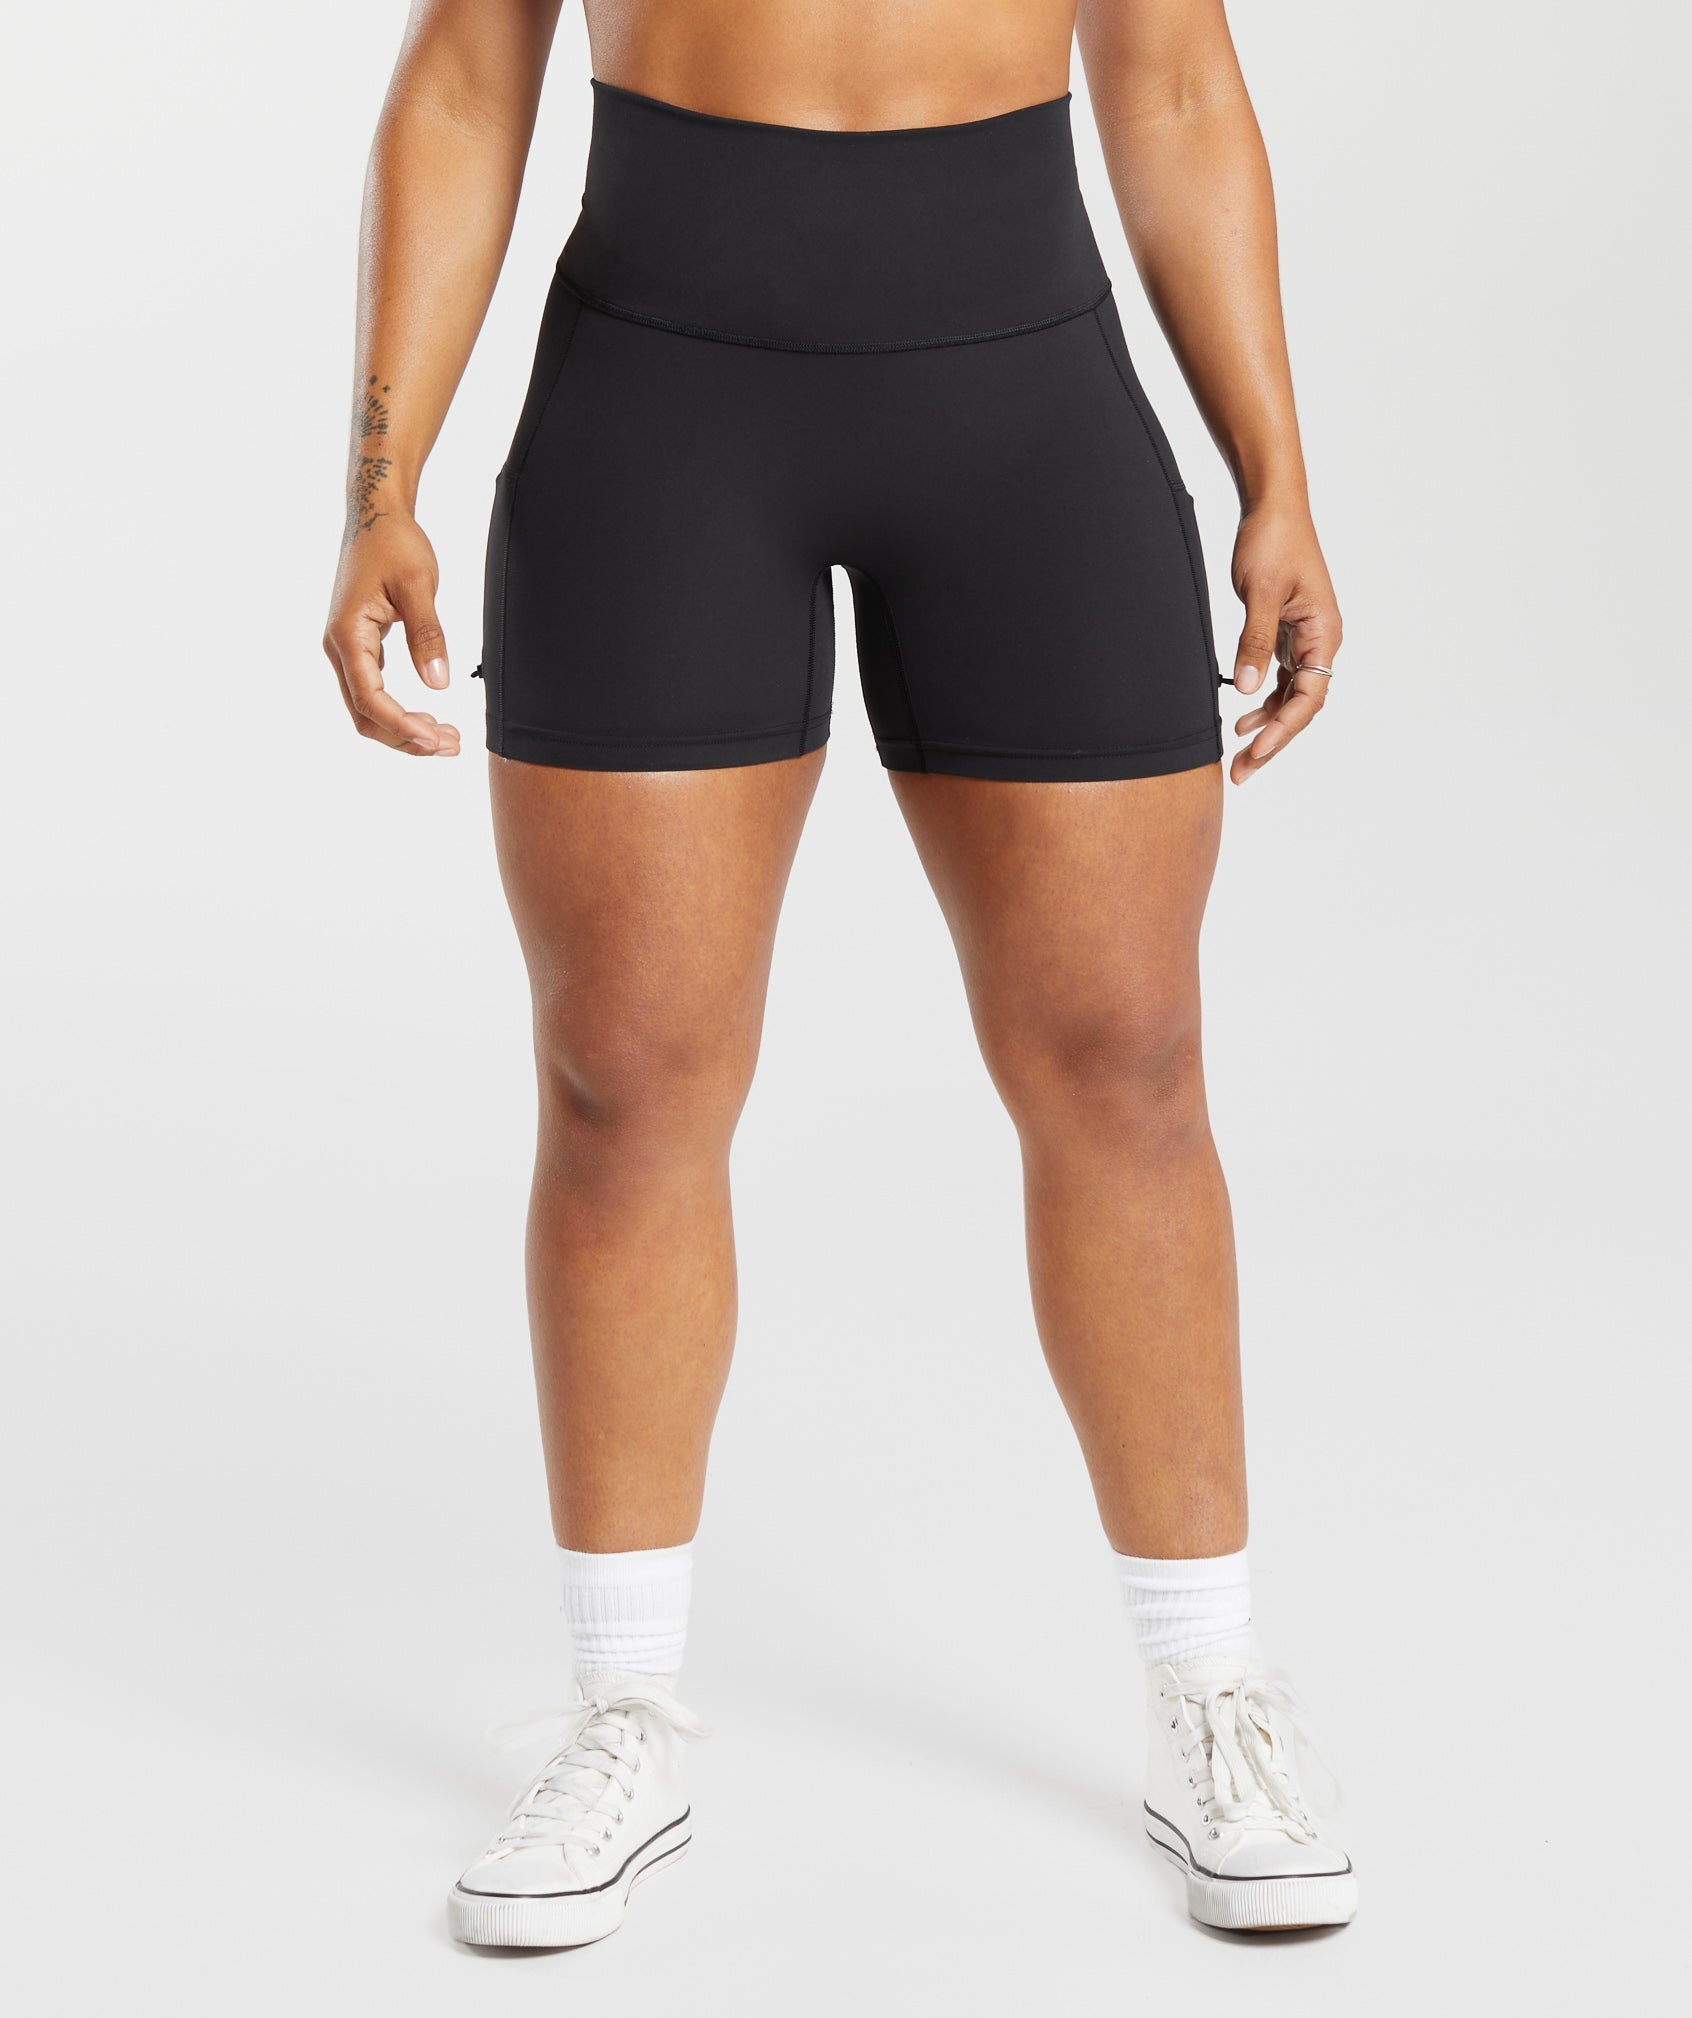 Women's Gym Shorts & Workout Shorts - Gymshark